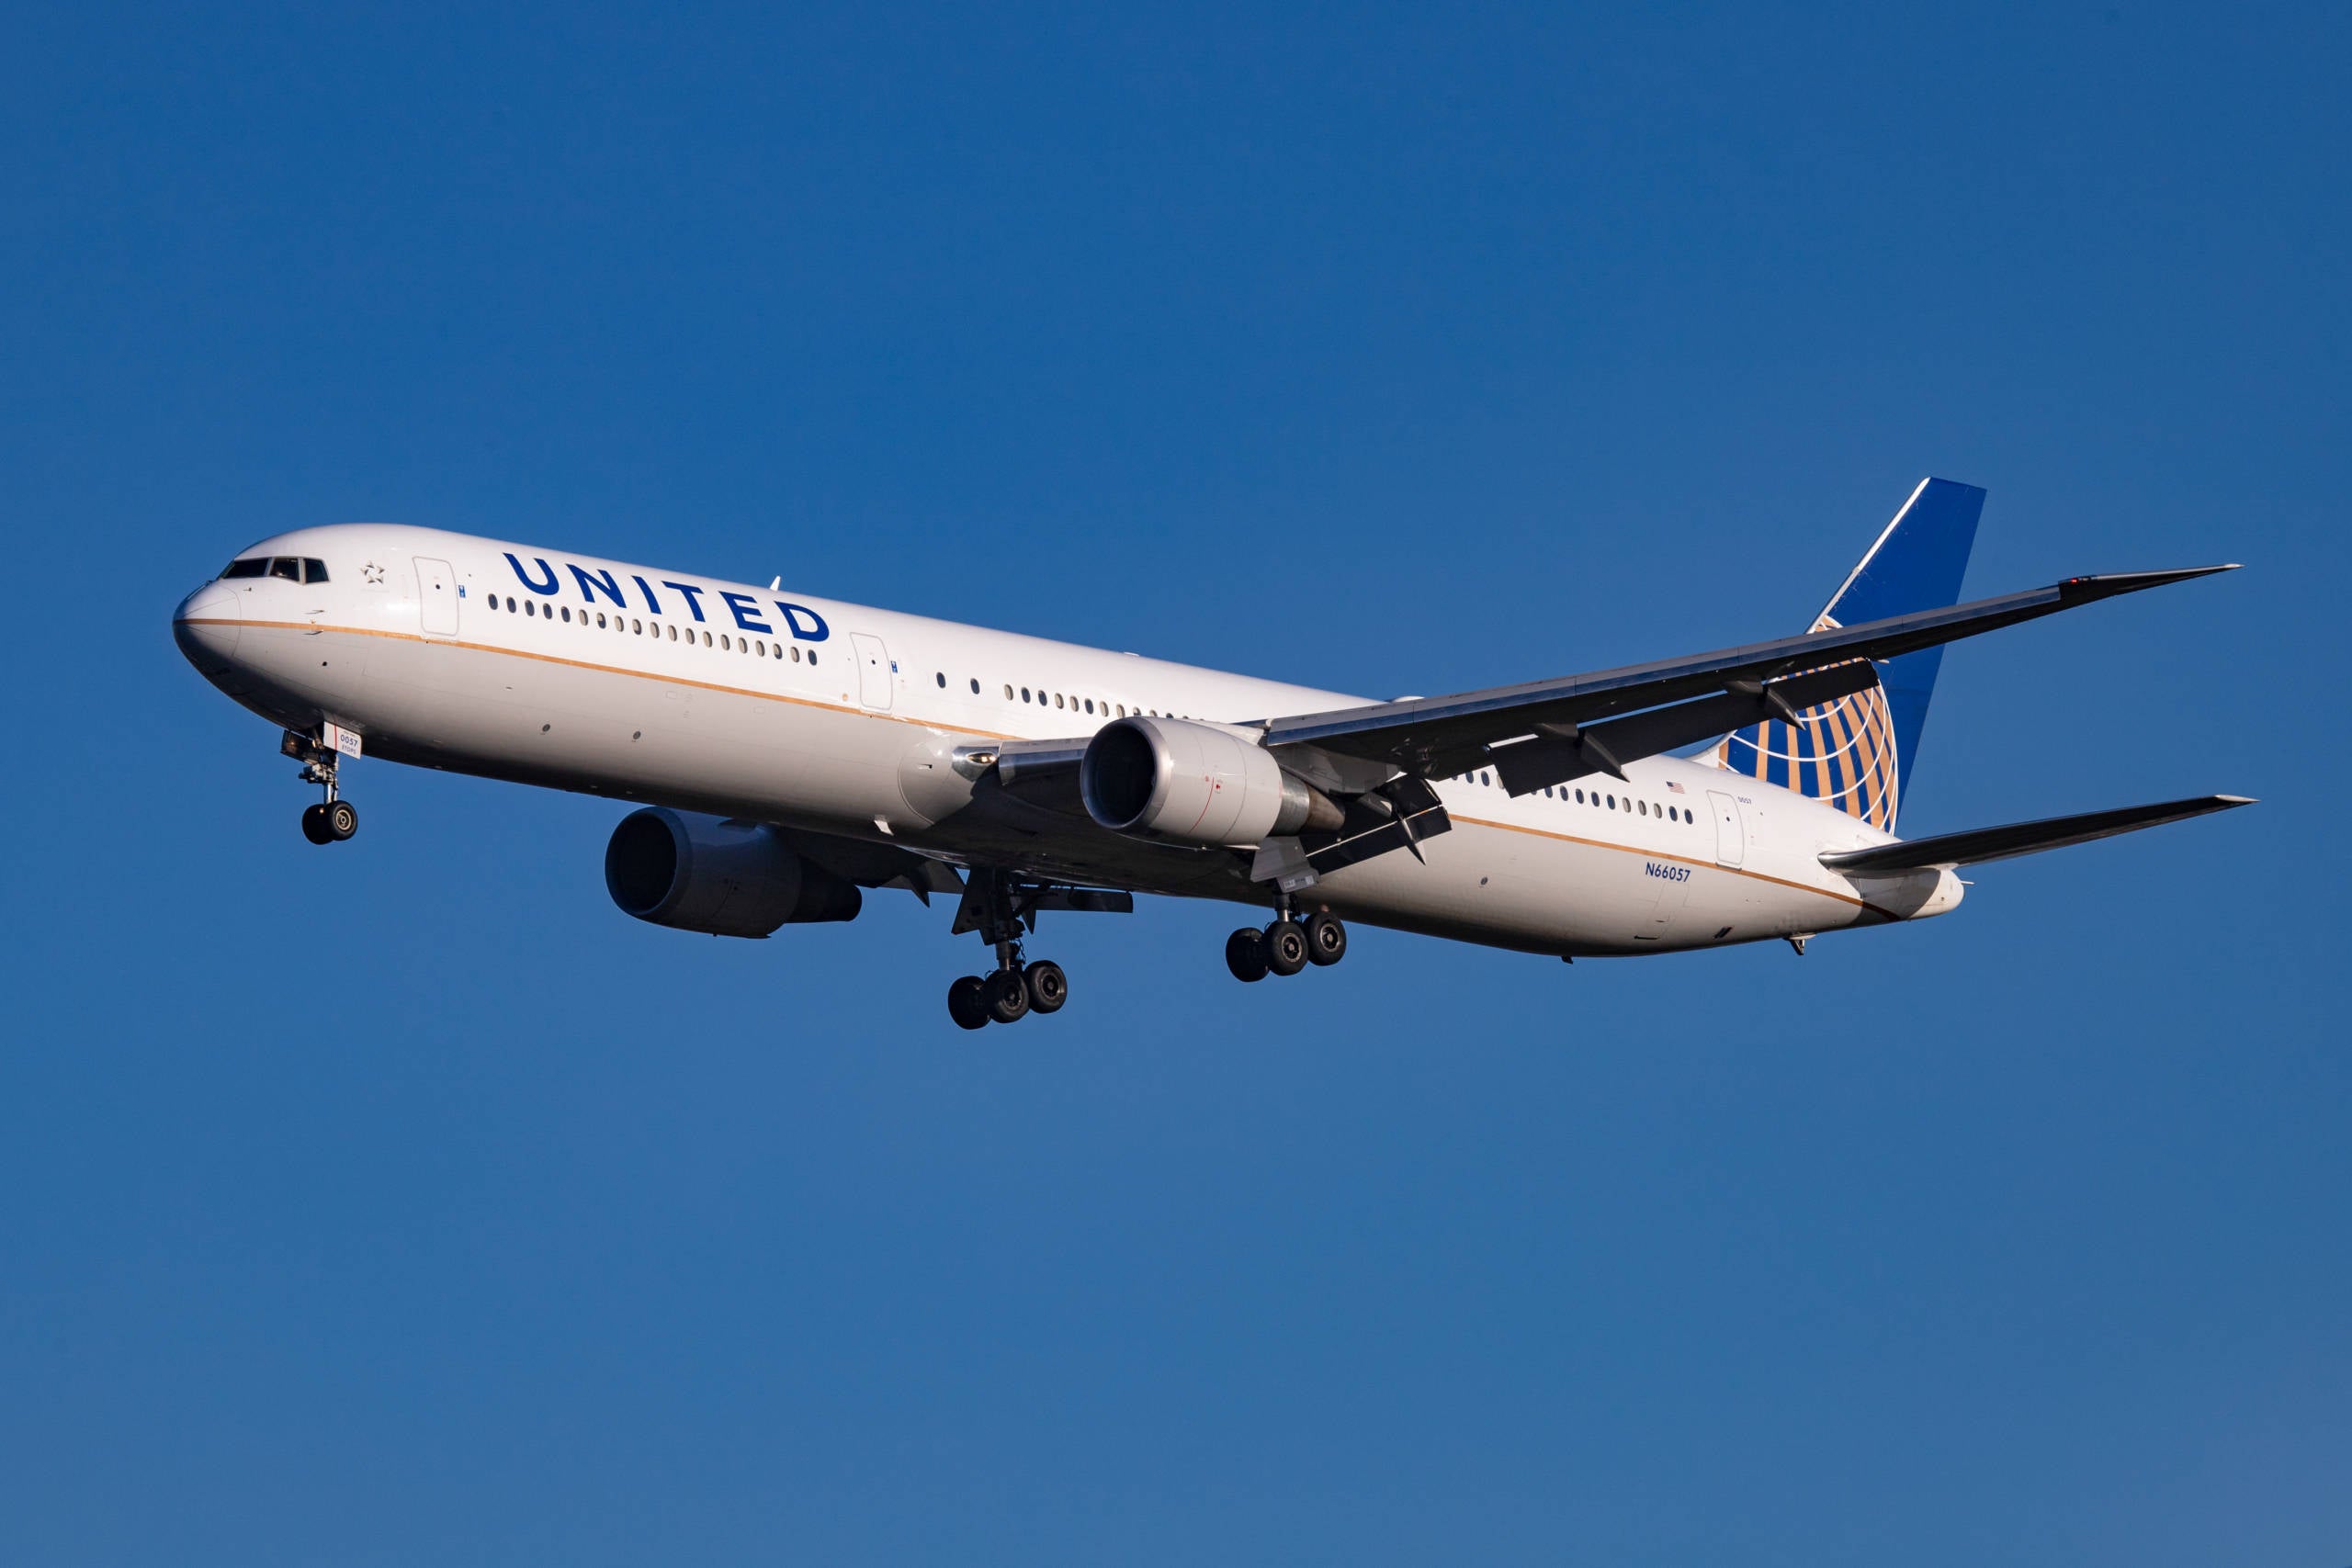 United Airlines Boeing 767-400 ER